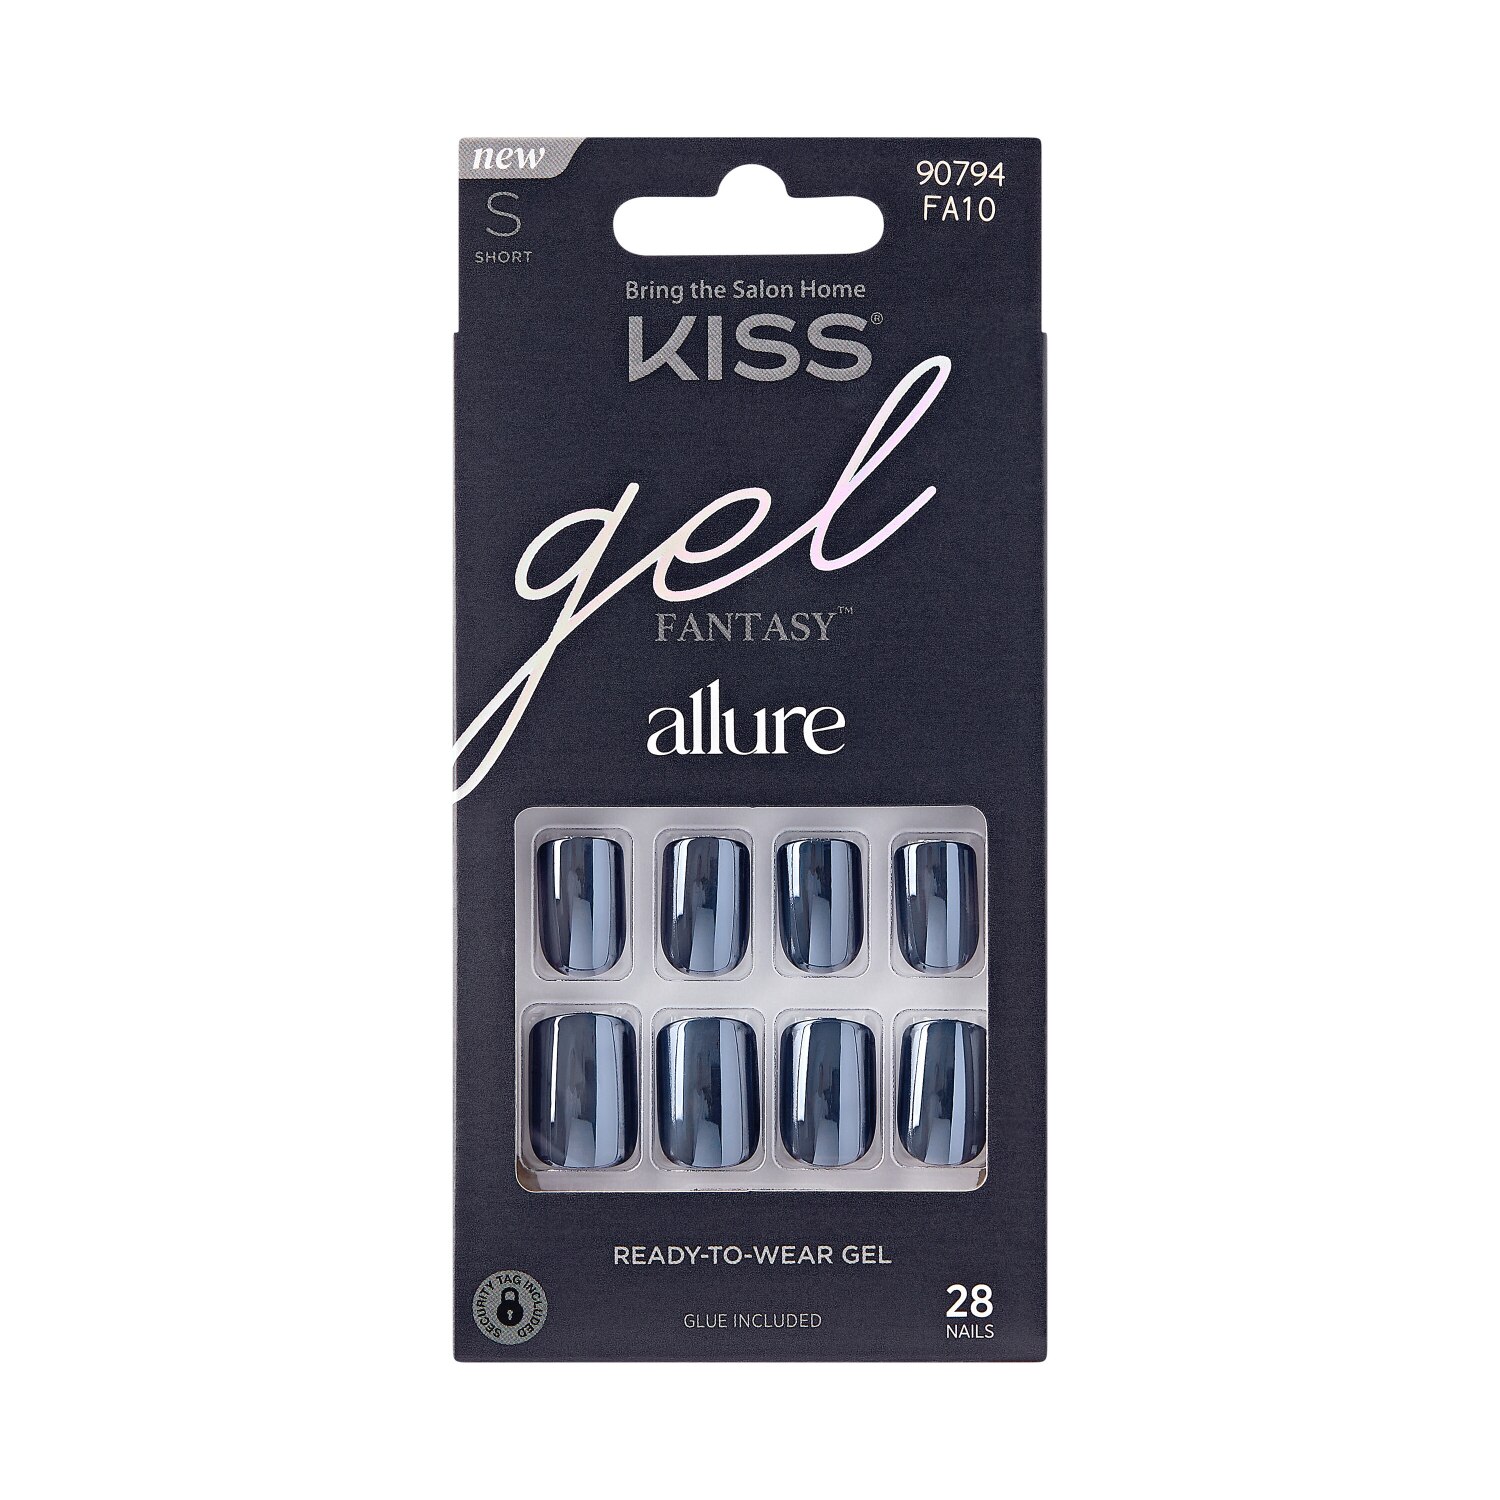 KISS Gel Fantasy Allure Press-On Nails, Dark Blue, Short, Square, 31 Ct. , CVS